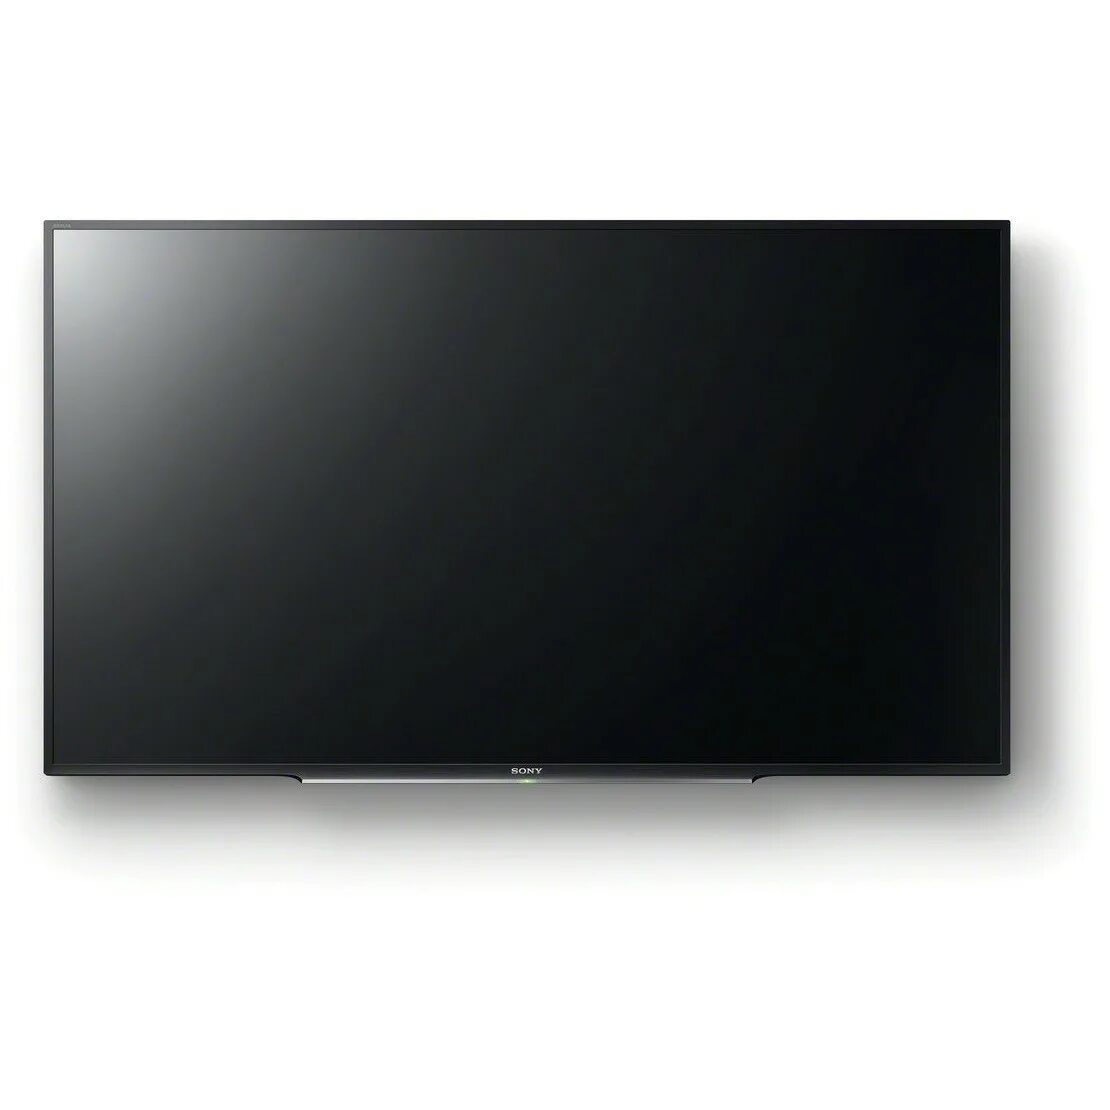 Телевизор сони KDL-32wd603. Телевизор 32" Sony KDL-32wd603. Телевизор сони КДЛ 32wd603. Sony Bravia 32wd603.